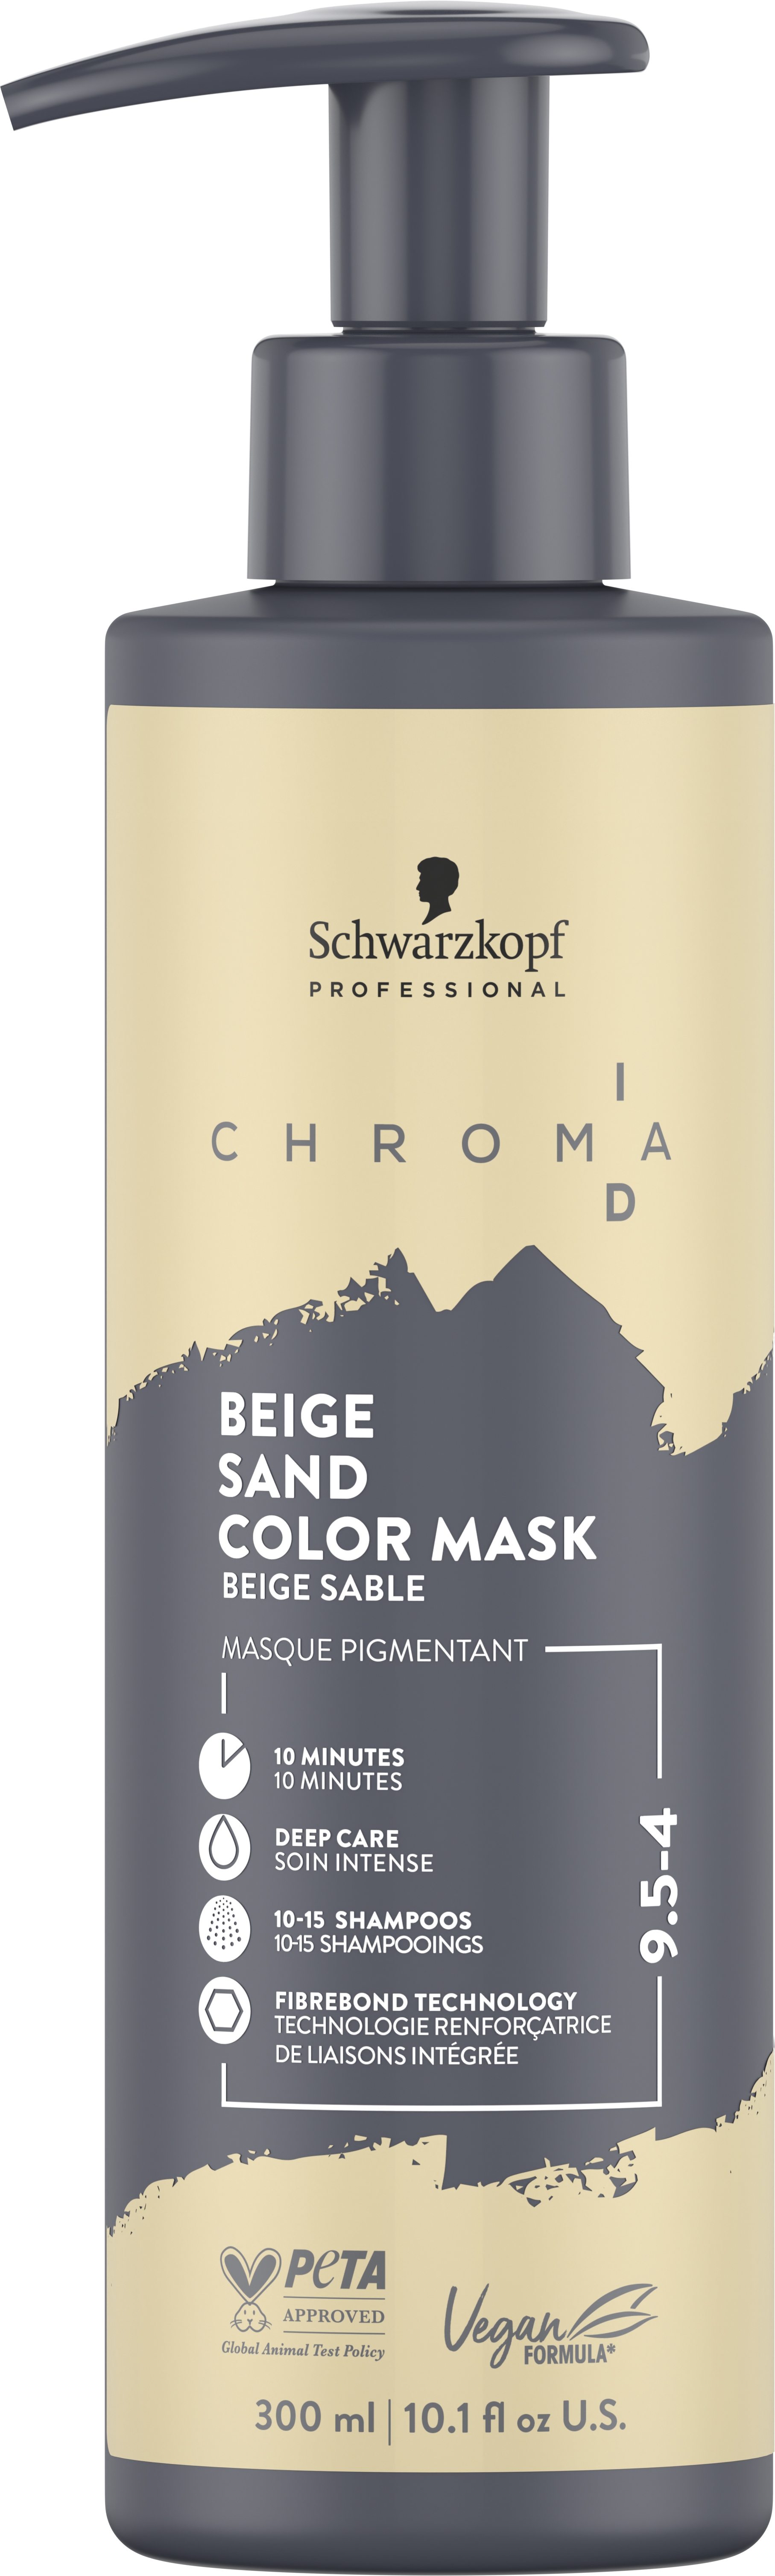 Produktbild von Chroma ID - Bonding Color Mask 9,5-4 Beige Sand